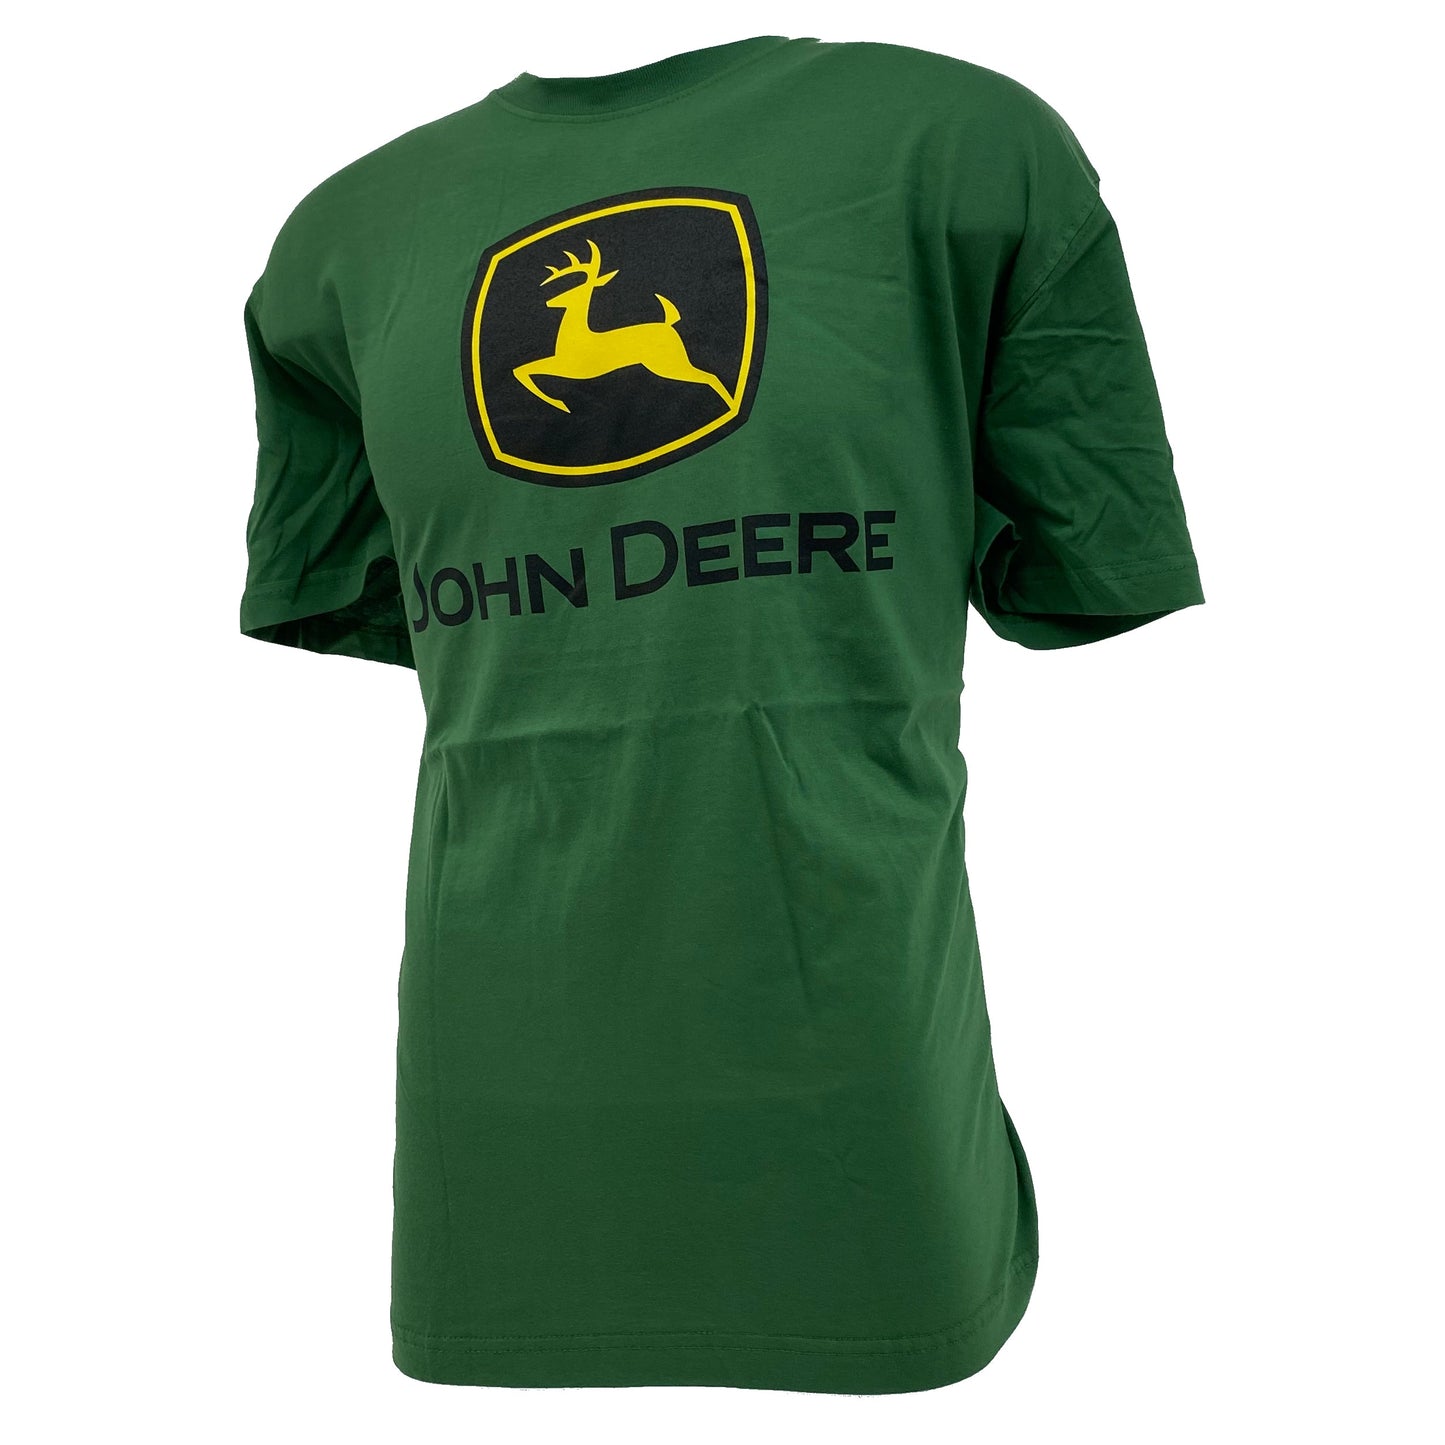 John Deere Green T-Shirt Large - LP75683